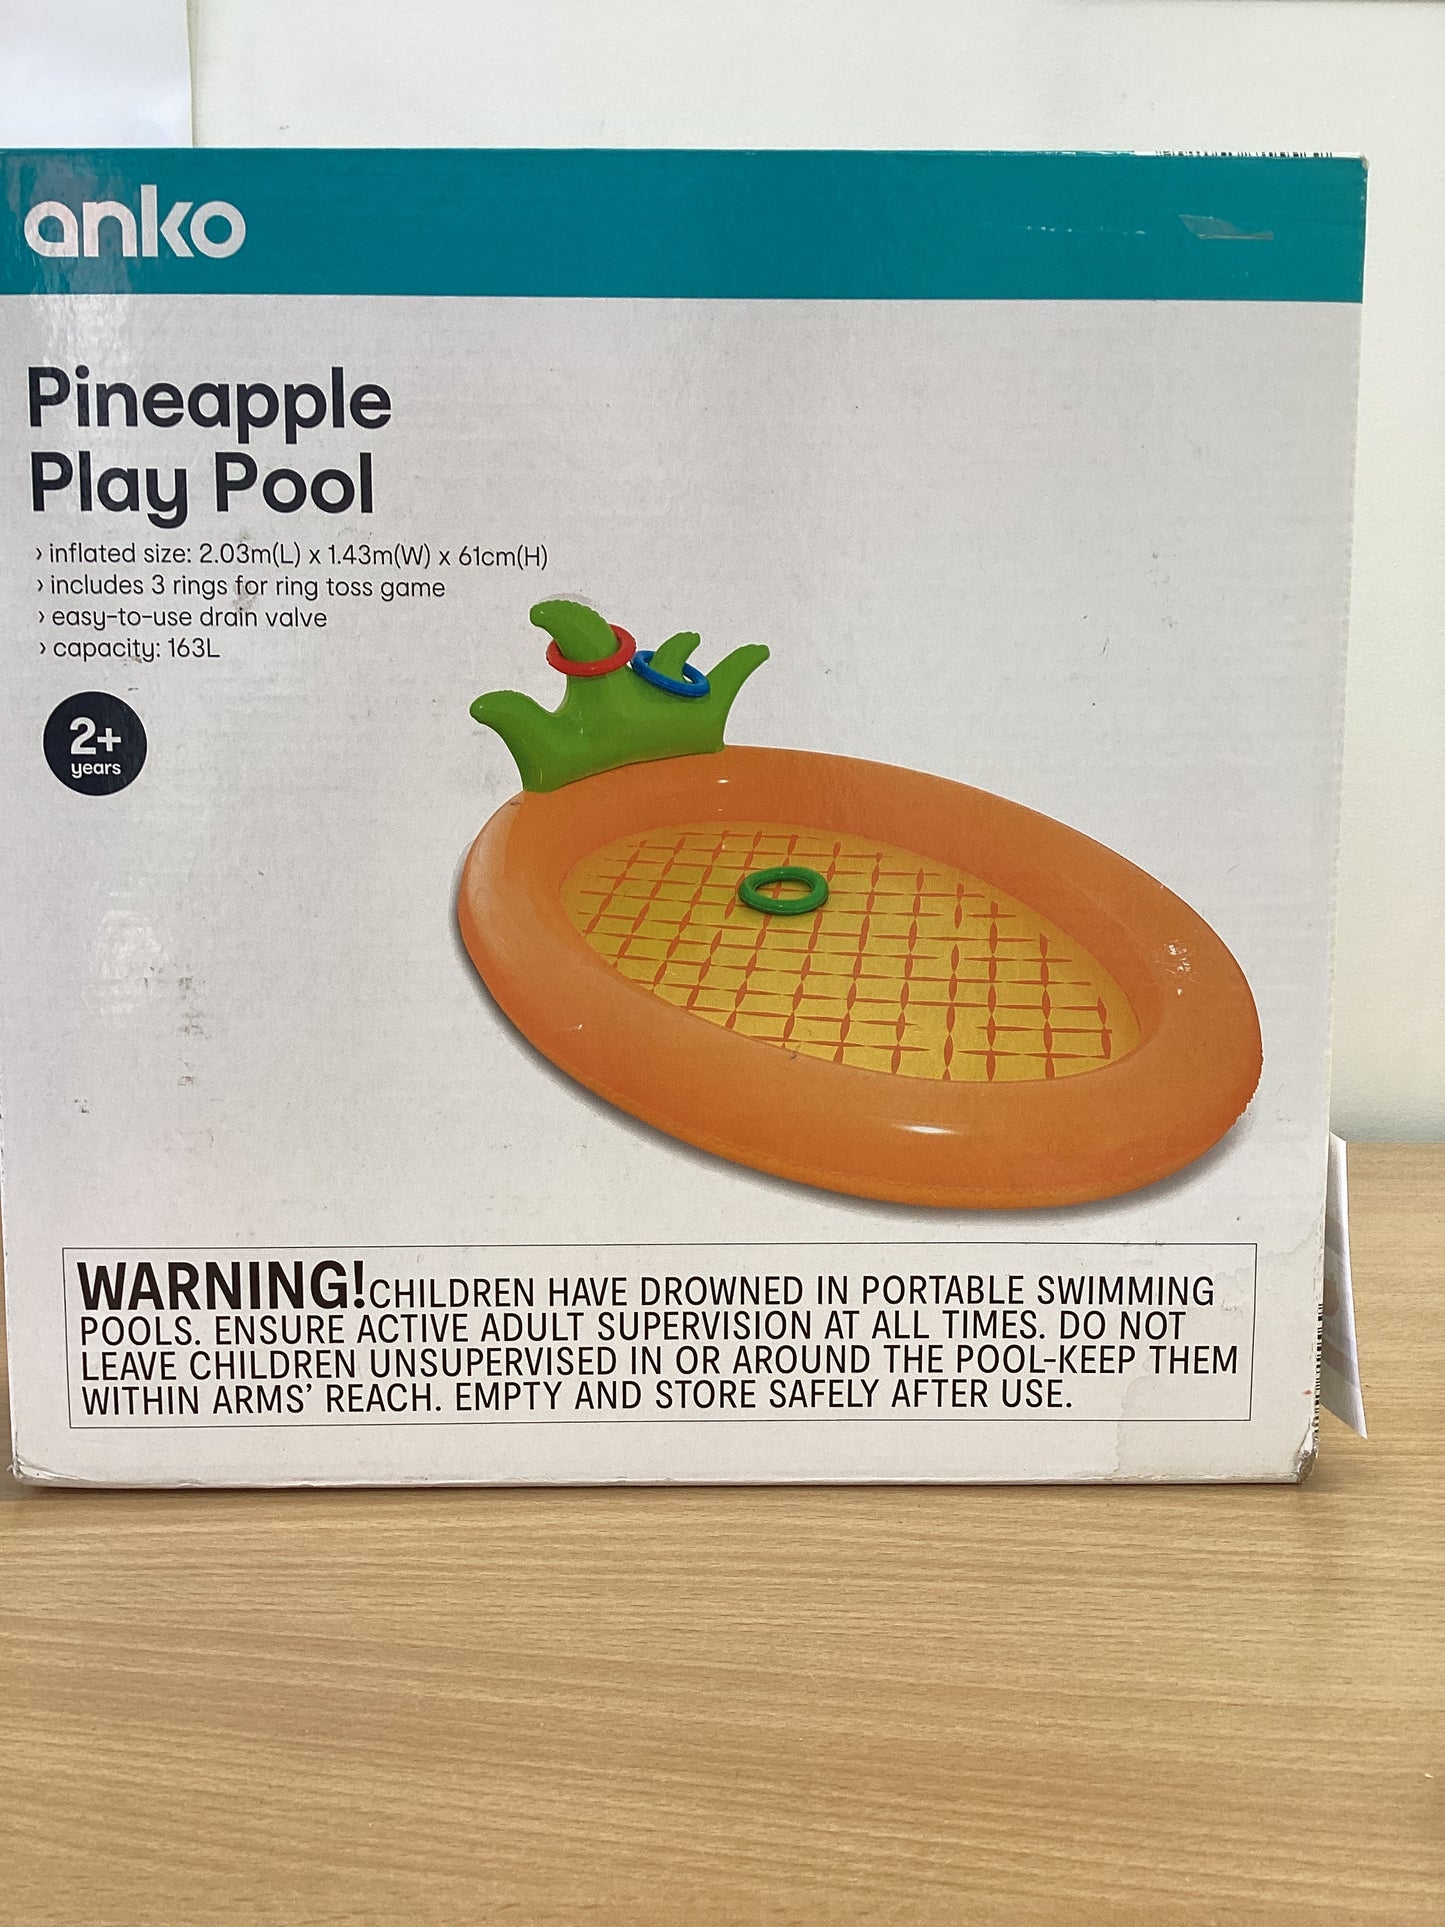 Anko Pineapple Play Pool